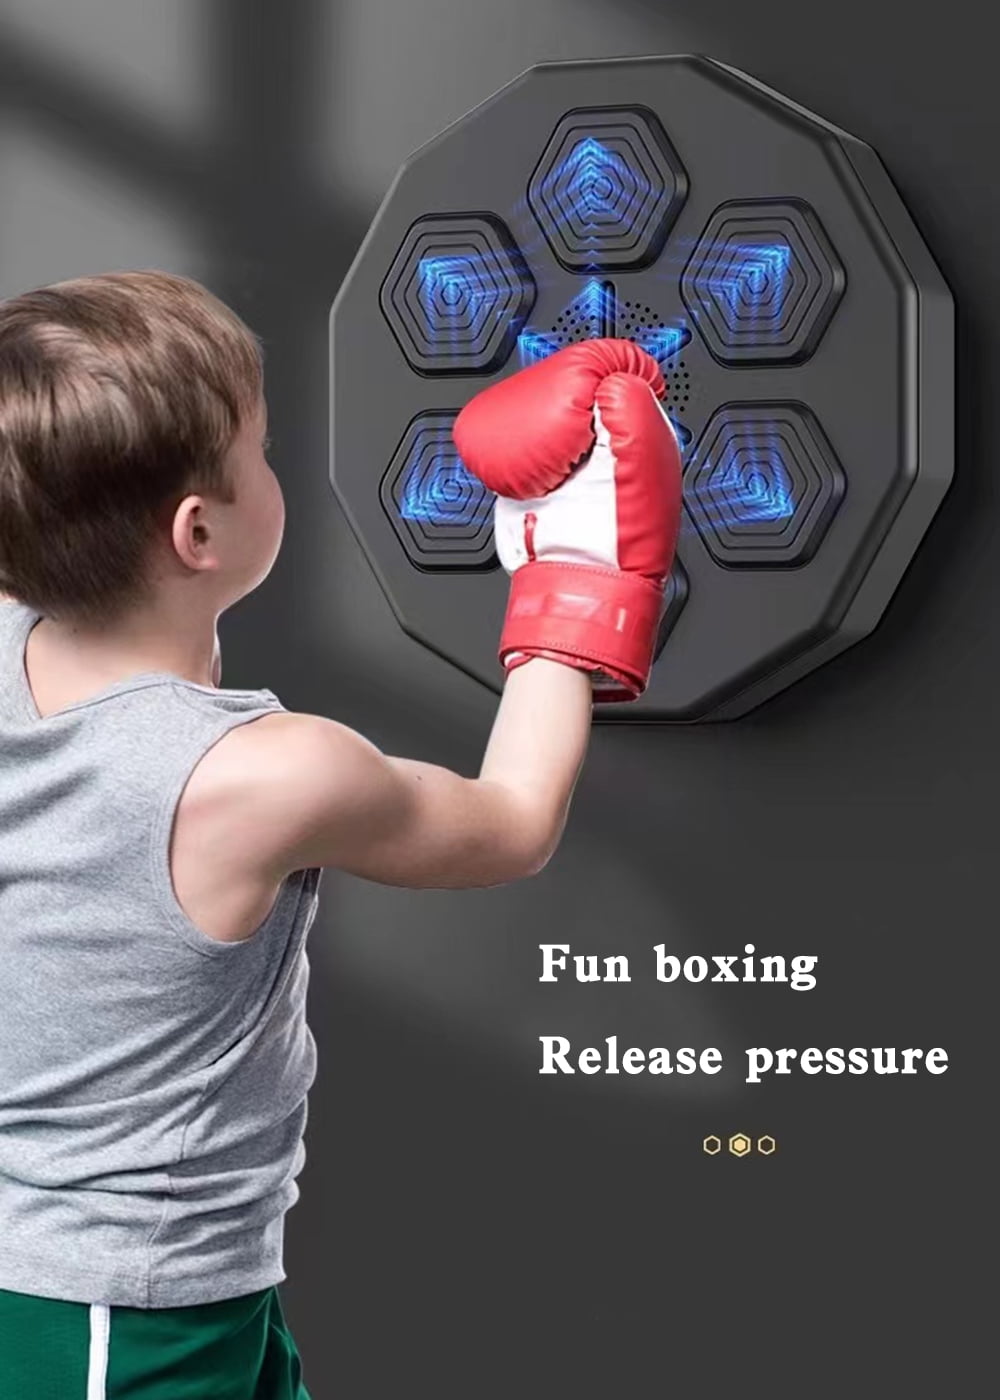 Boxing Machine Music Boxing Wall Target Kickboxing Music Boxing